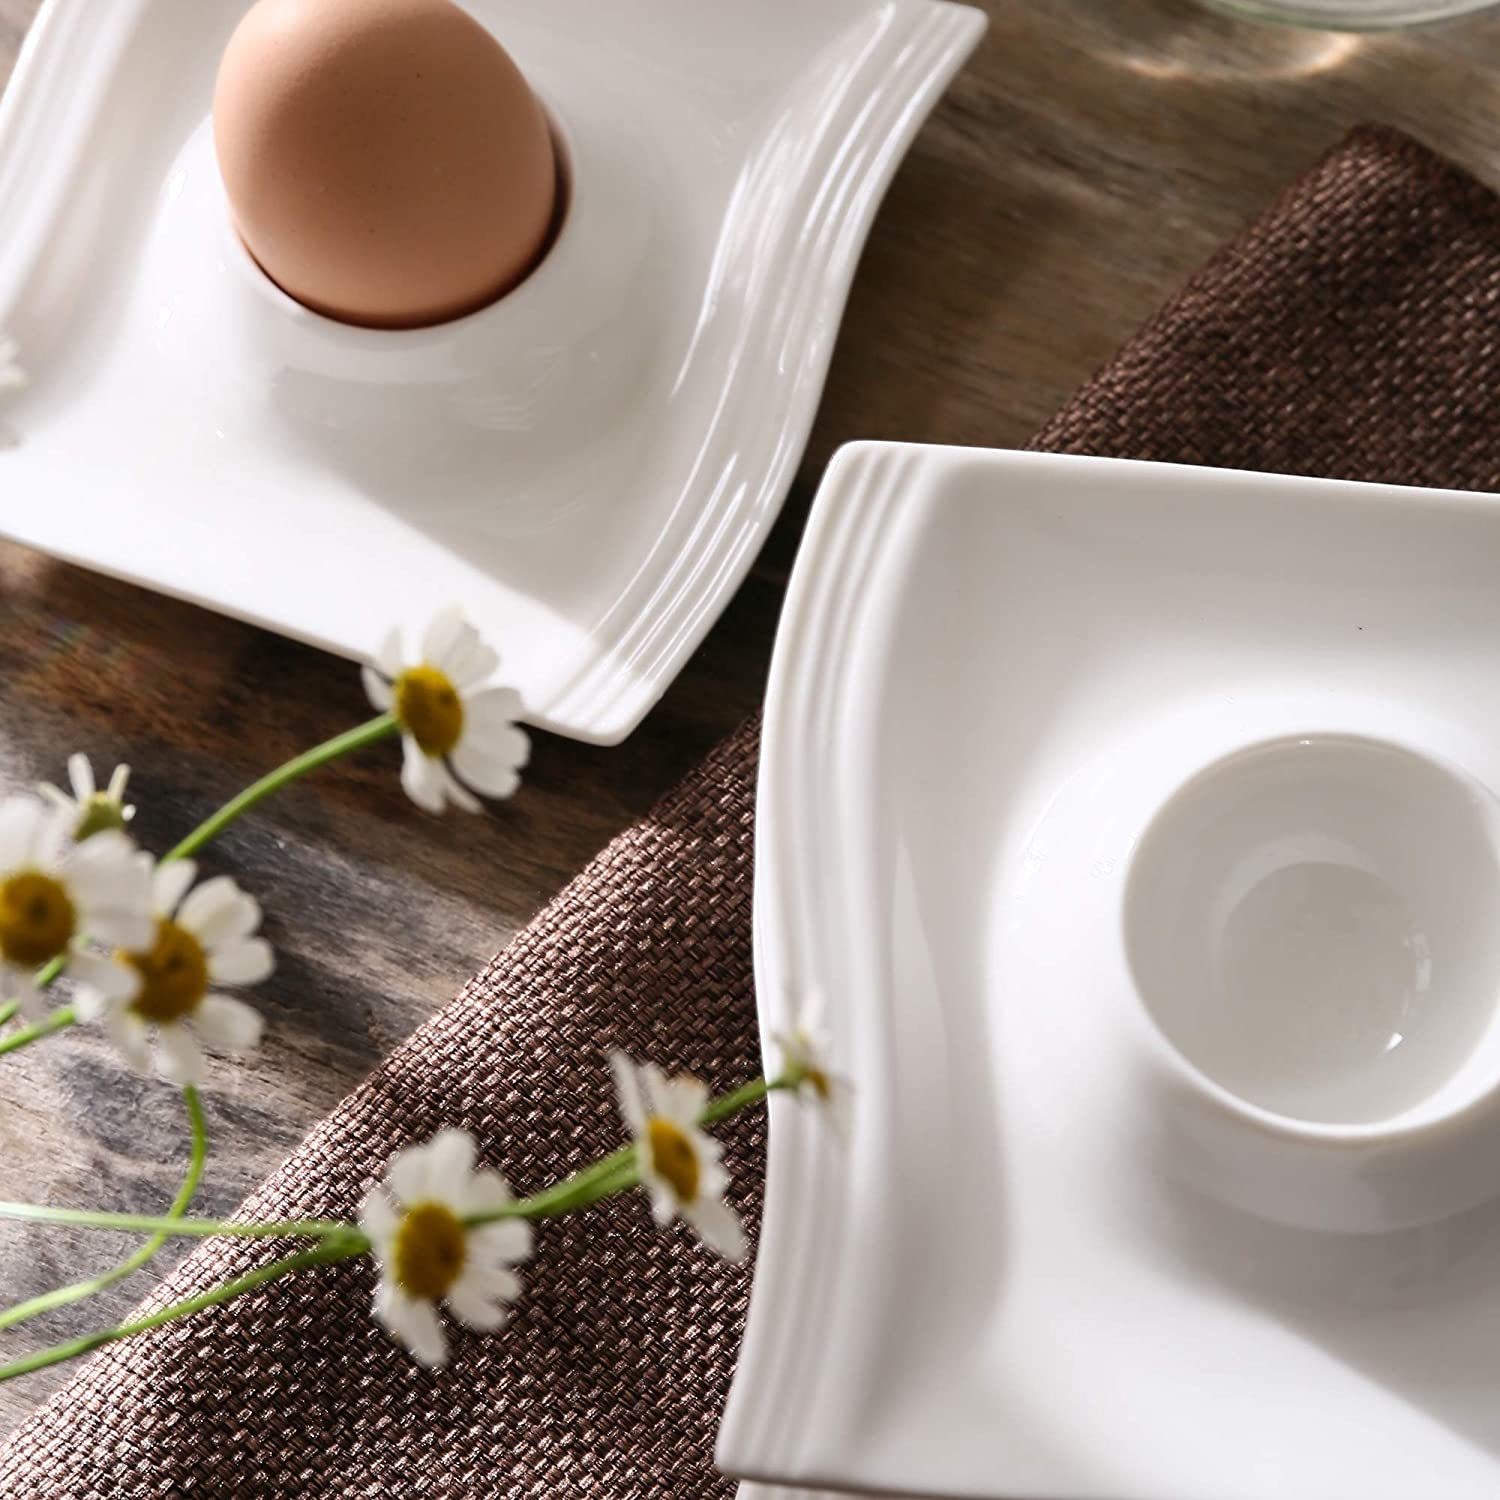 MALACASA, Flora Series 12-Piece Cream White Porcelain Egg Stand Set 4.5 Inches / 11.5 x 11.5 x 2 cm Egg Cup Egg Holder